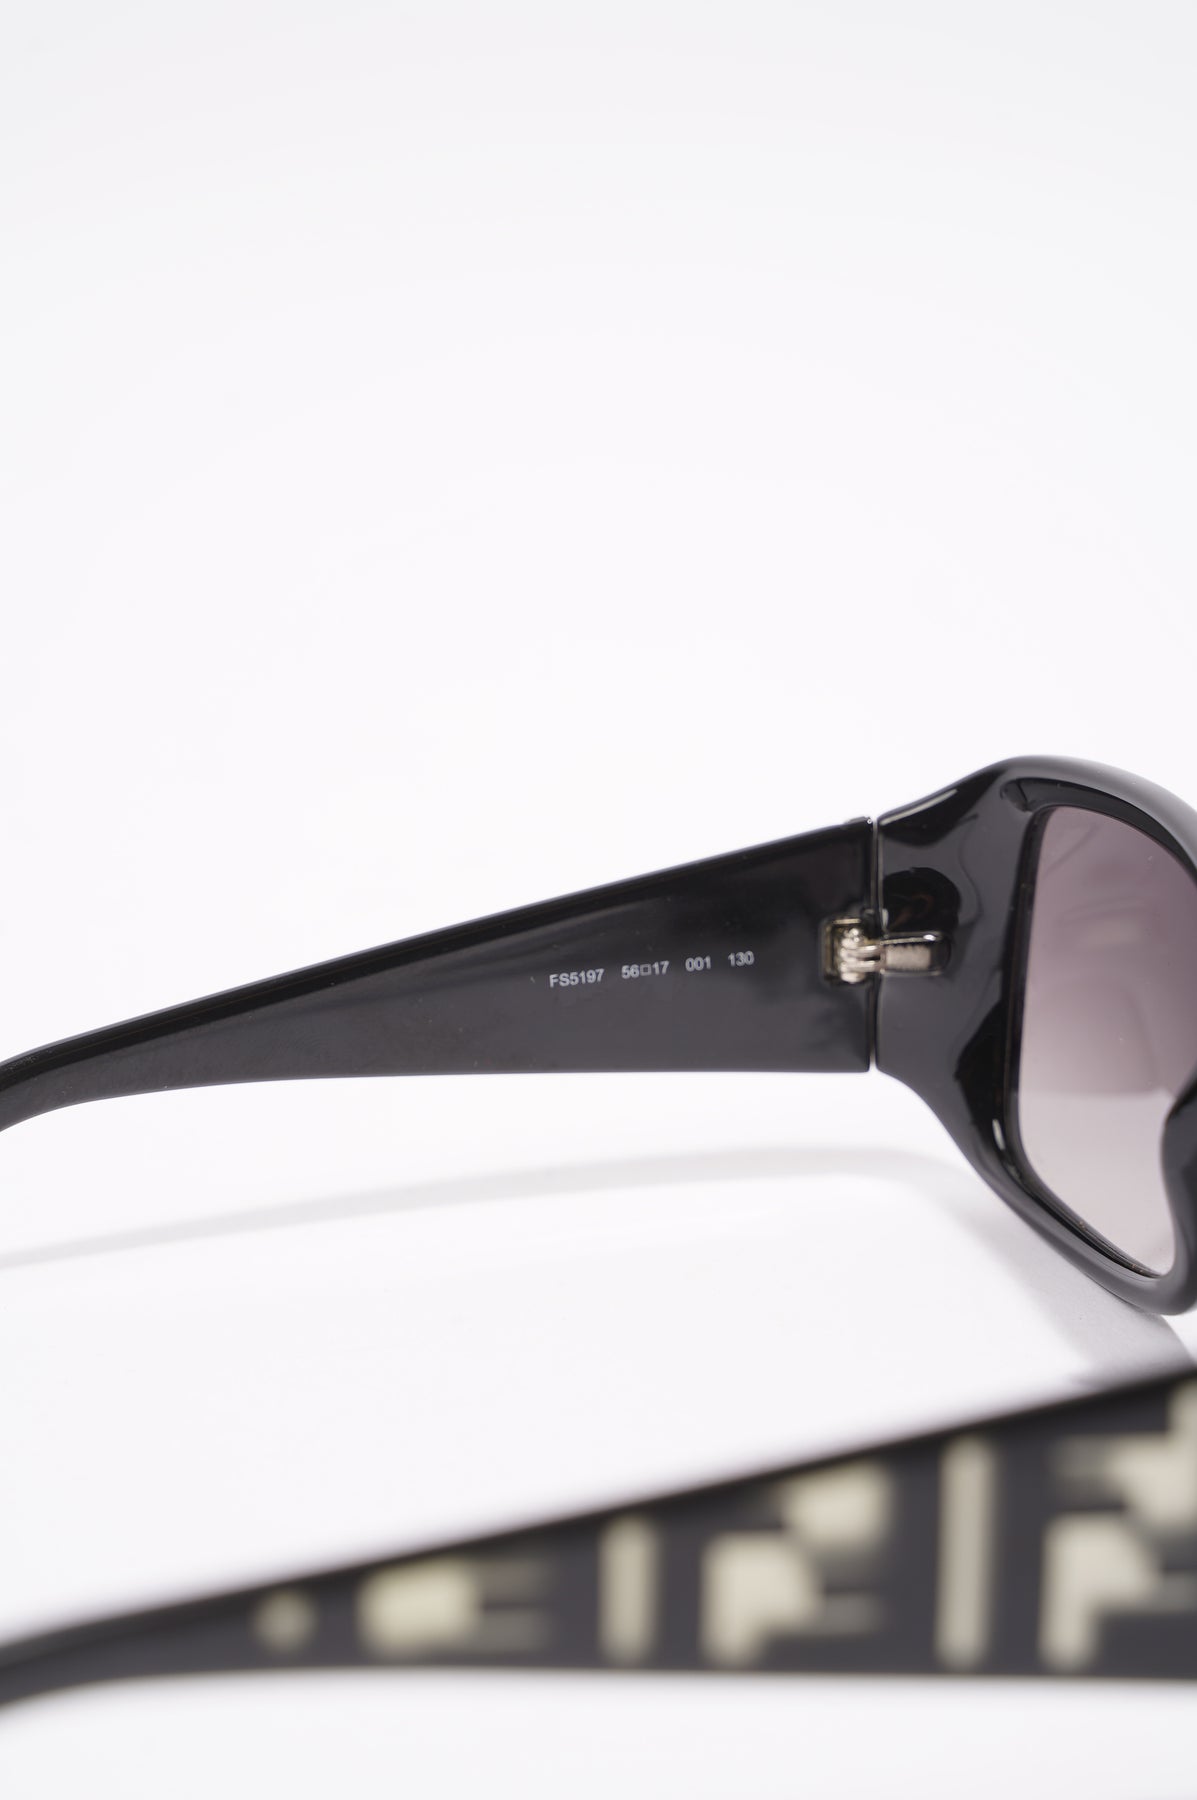 Benzo Store - FENDI Sunglasses 2021